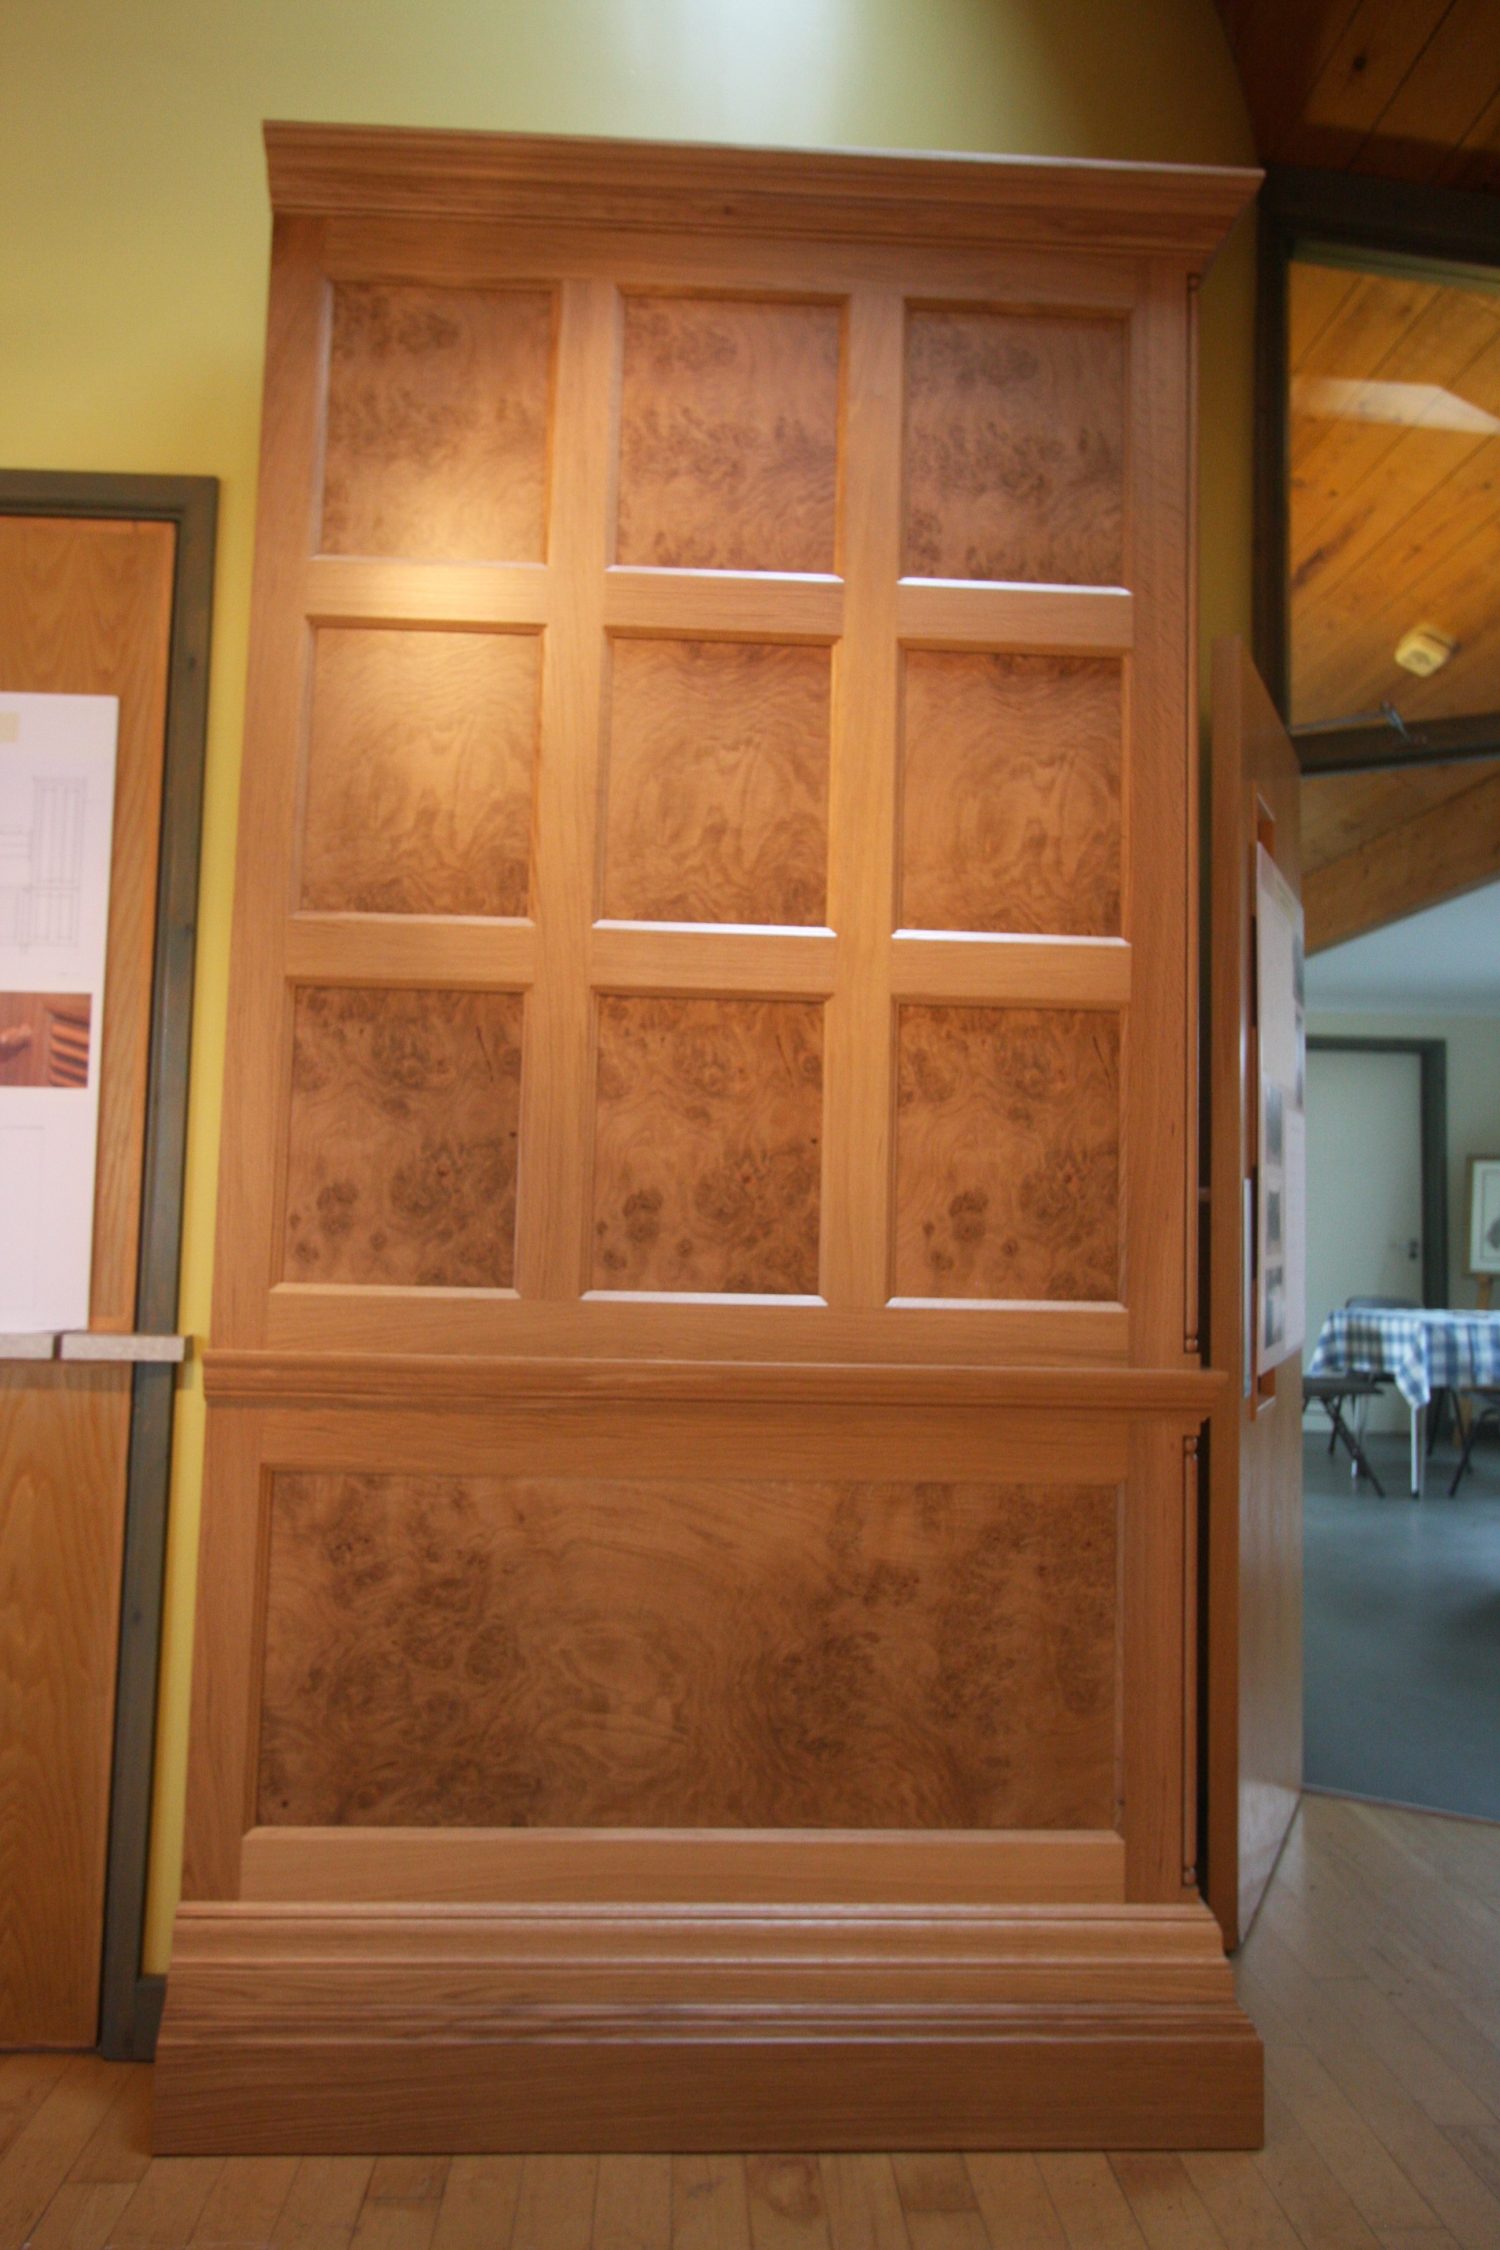 Vertical Top Burr Oak Panels with Horizontal Burr Oak Panel Below Dado Rail